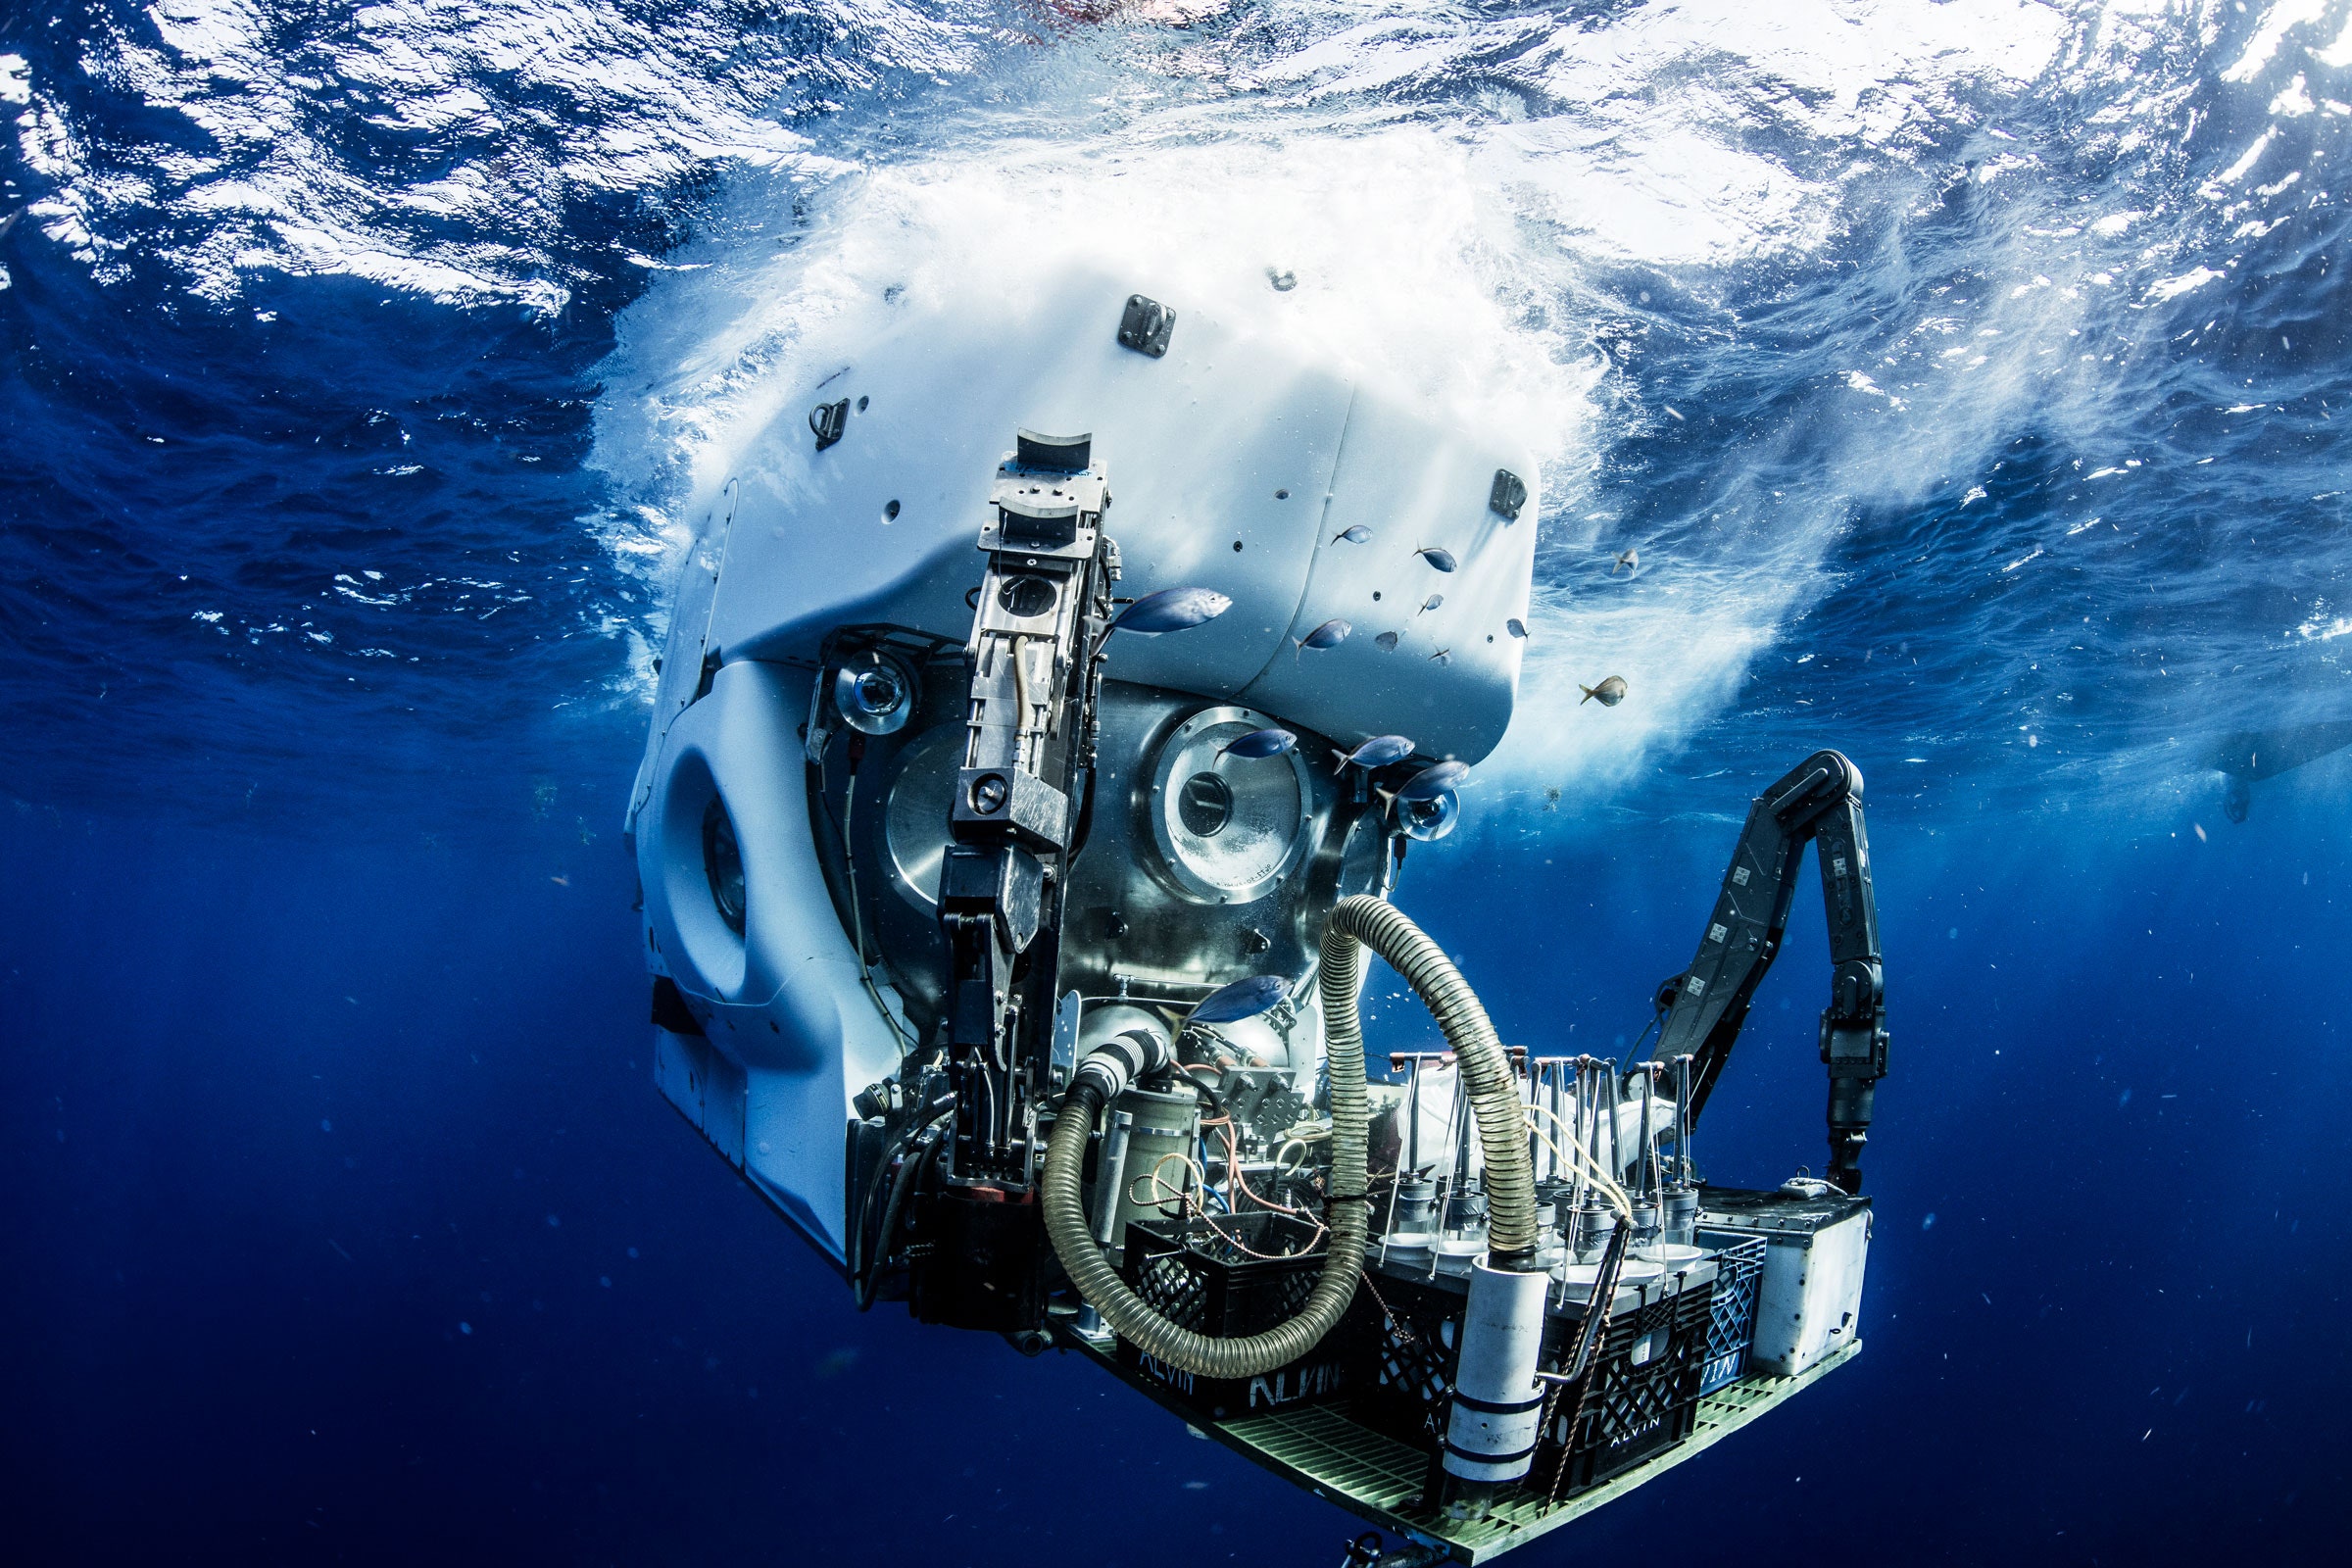 Alvin deep sea submersible Woods Hole Institute